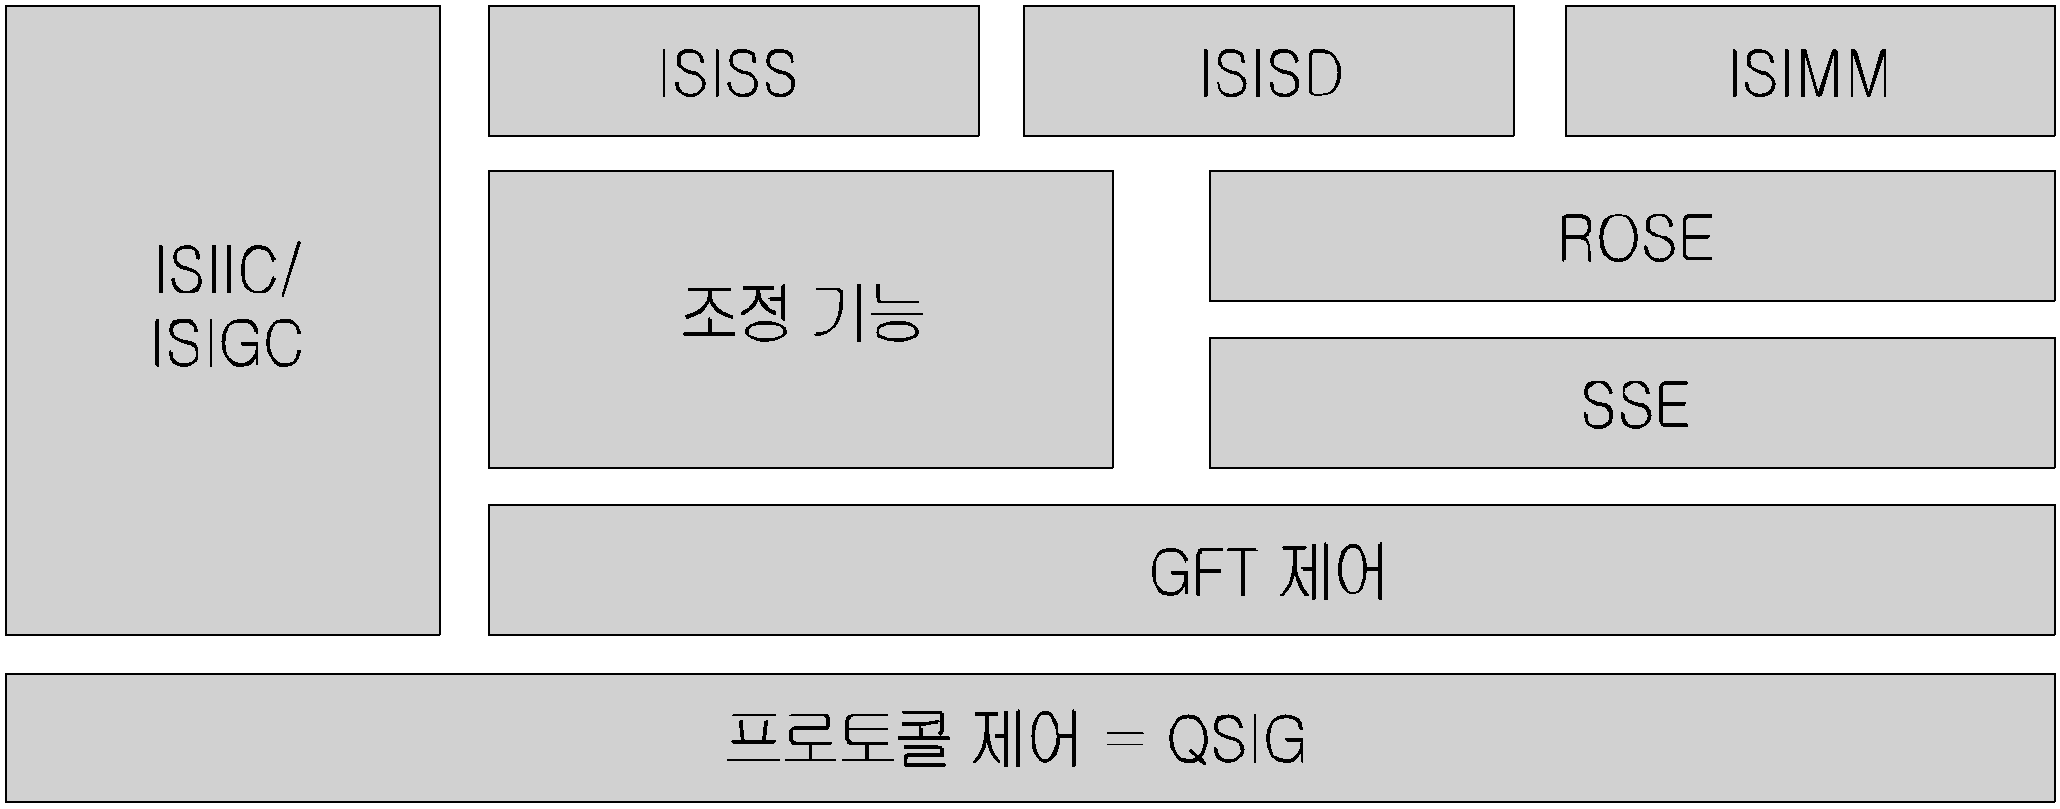 TETRA ISI 프로토콜 스택(Protocol Stack)